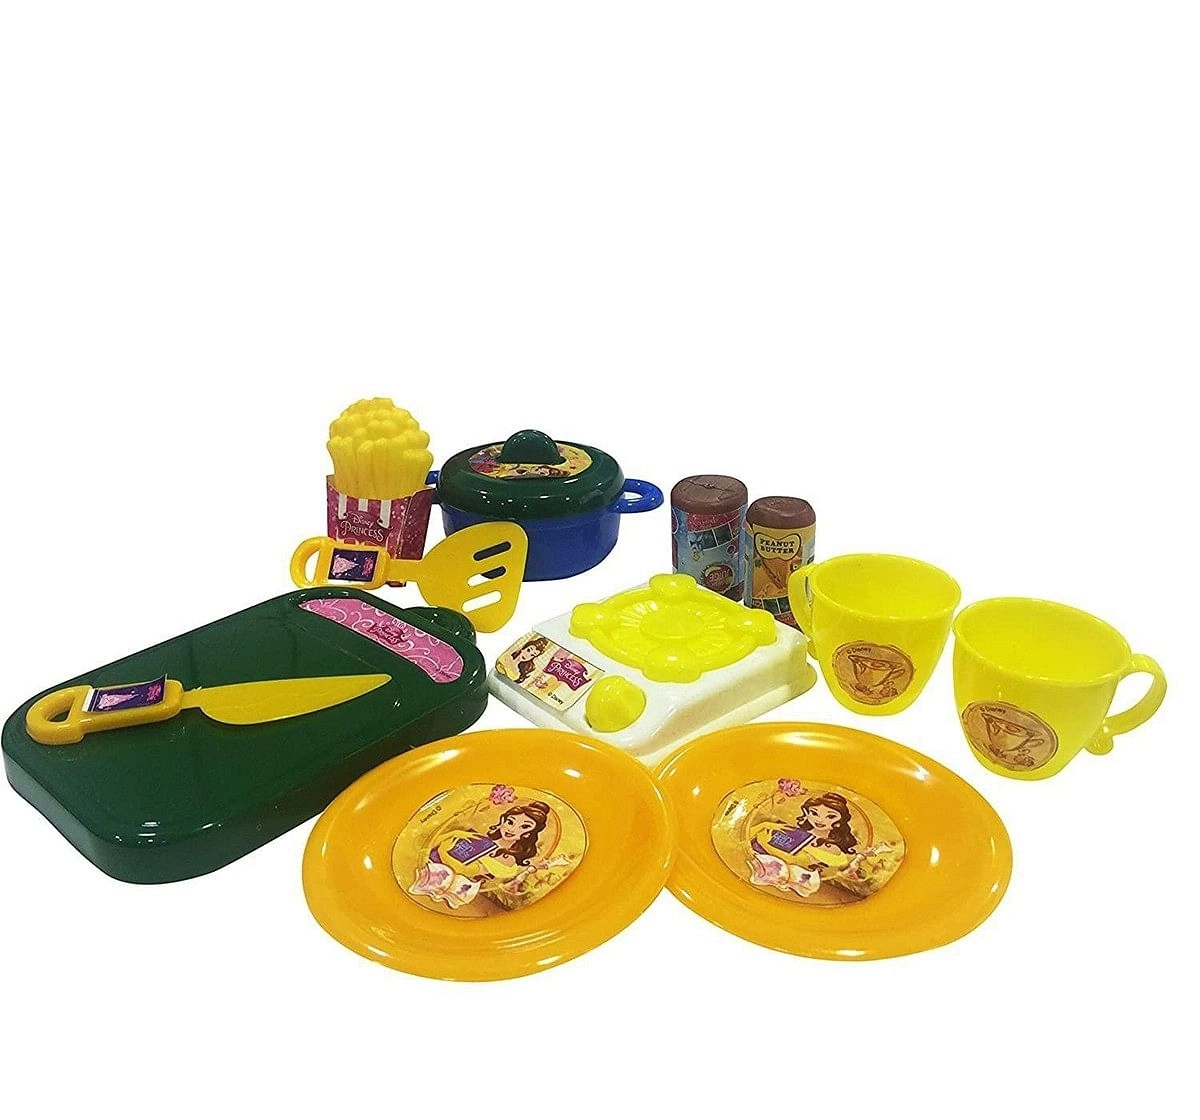 IToys Disney Kitchen Set - Assorted Kitchen Sets & Appliances for Kids Age 3Y+